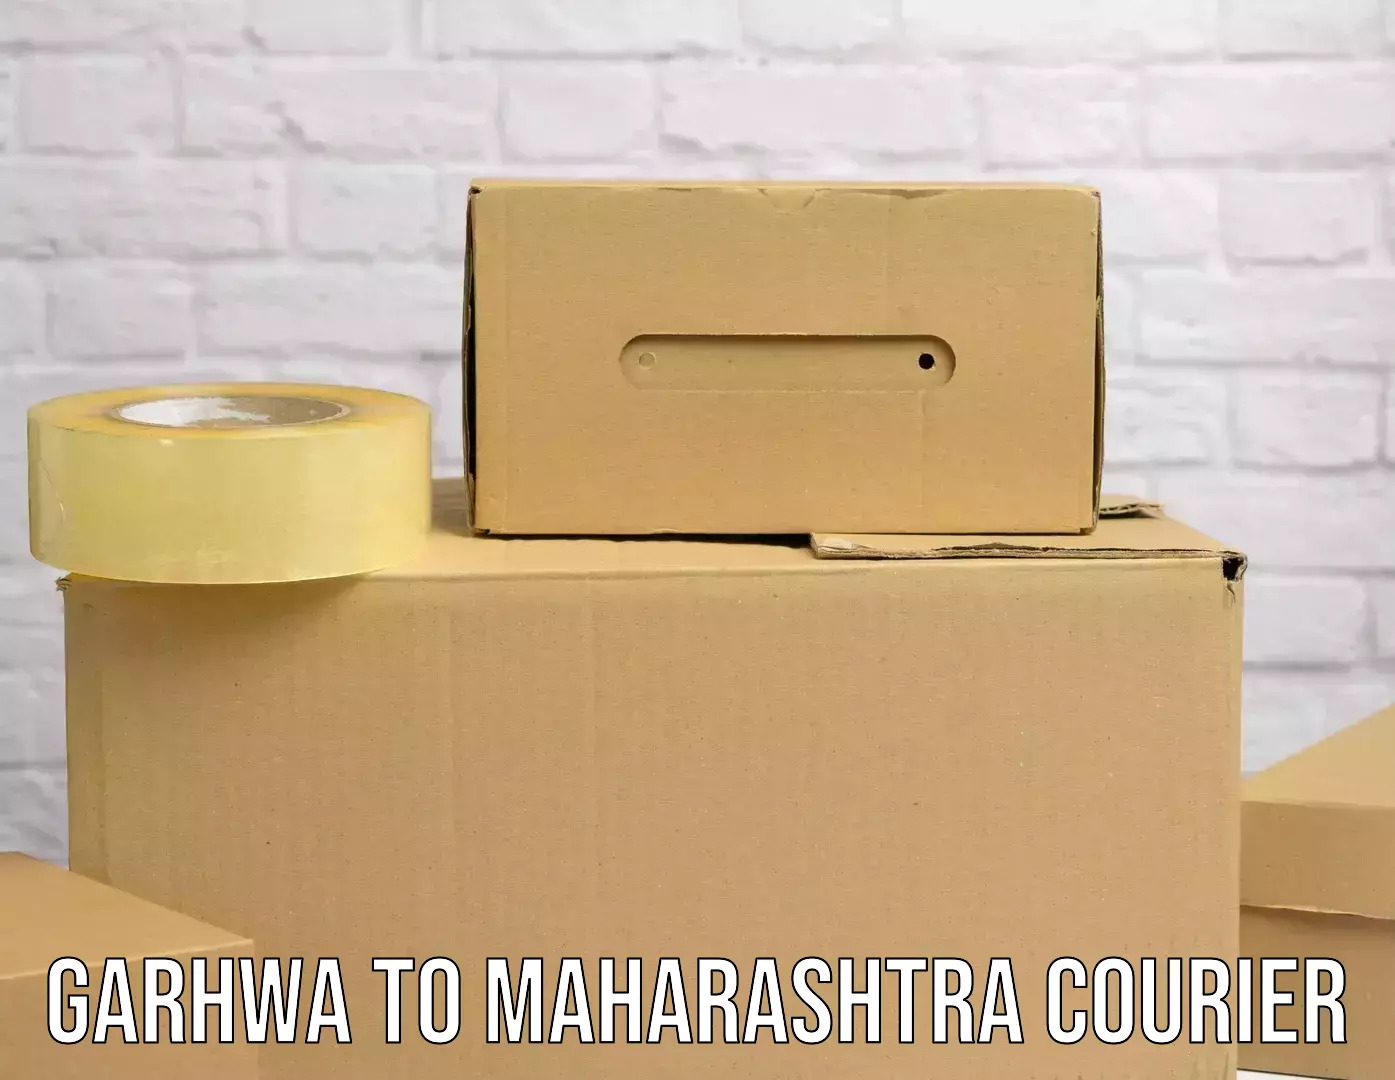 Courier service efficiency Garhwa to Maharashtra